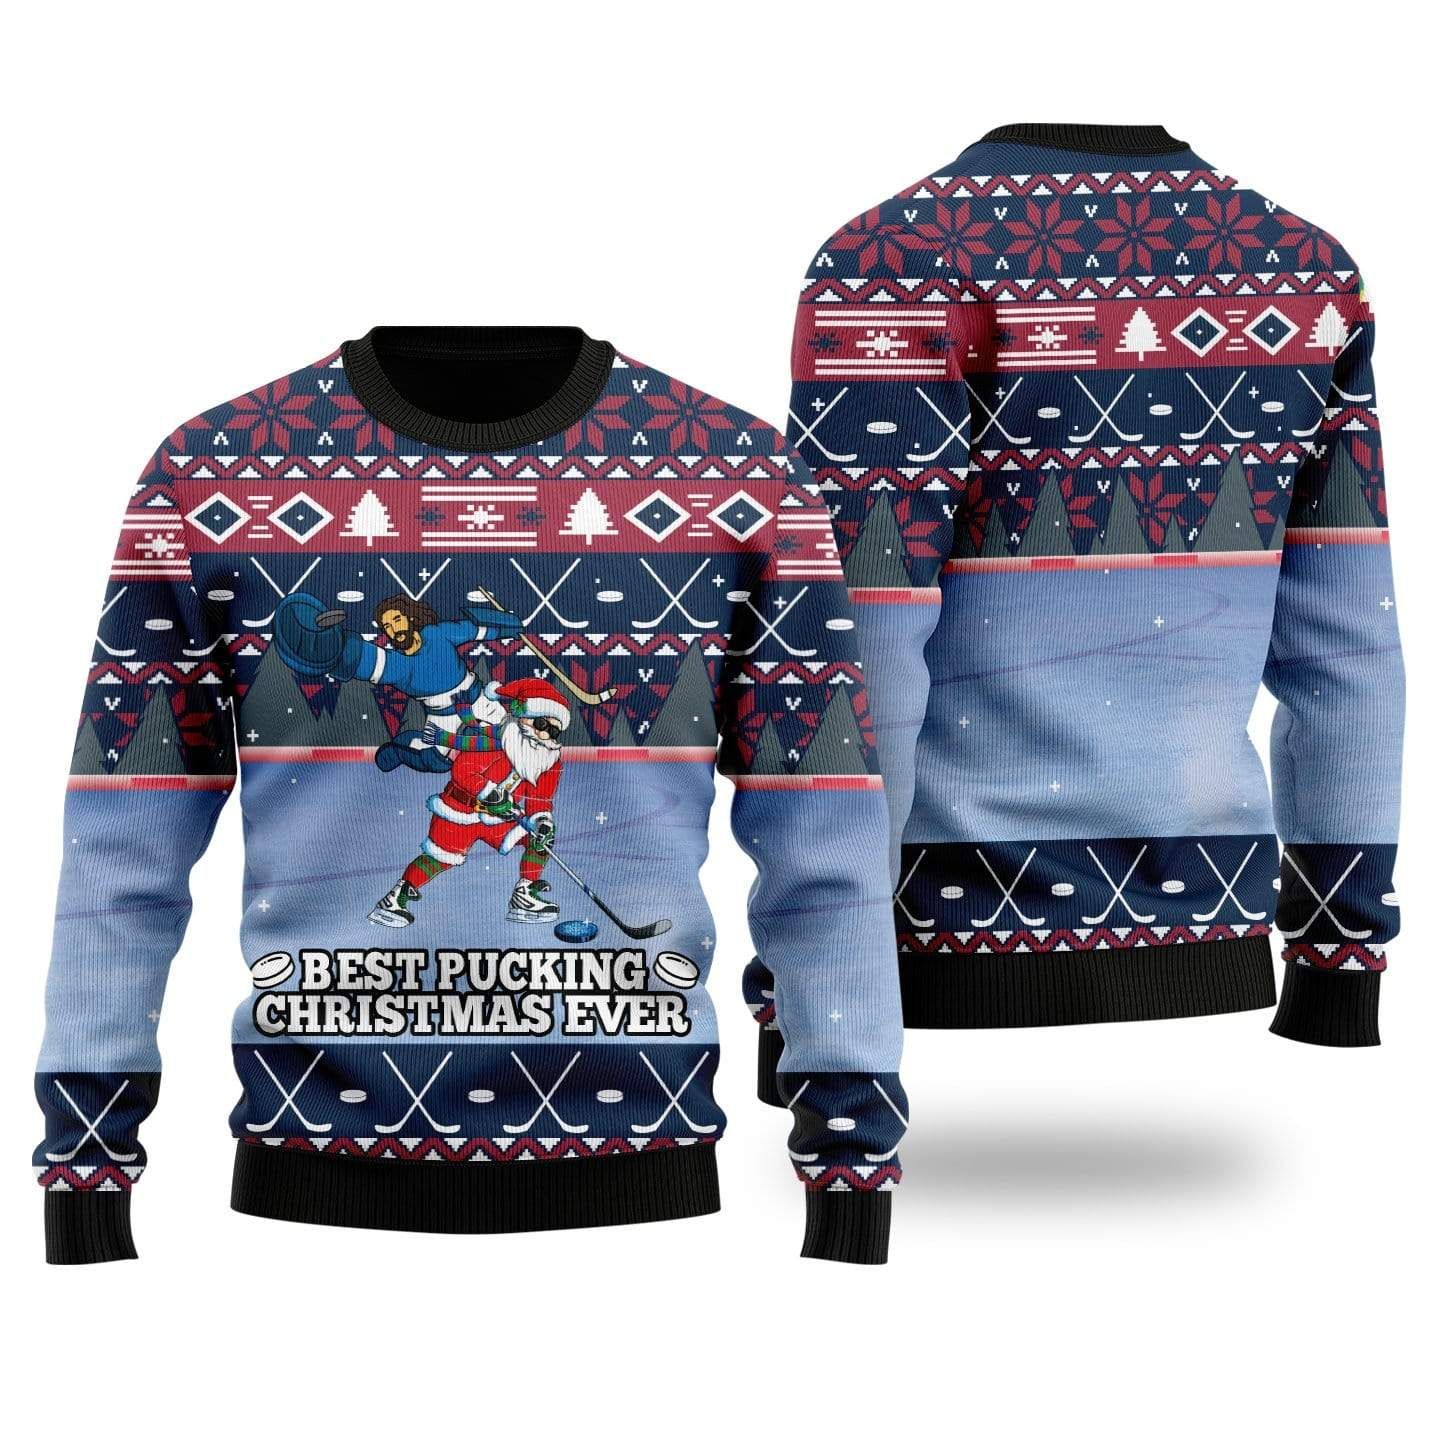 Hockey Best Pucking Christmas Ever Sweater